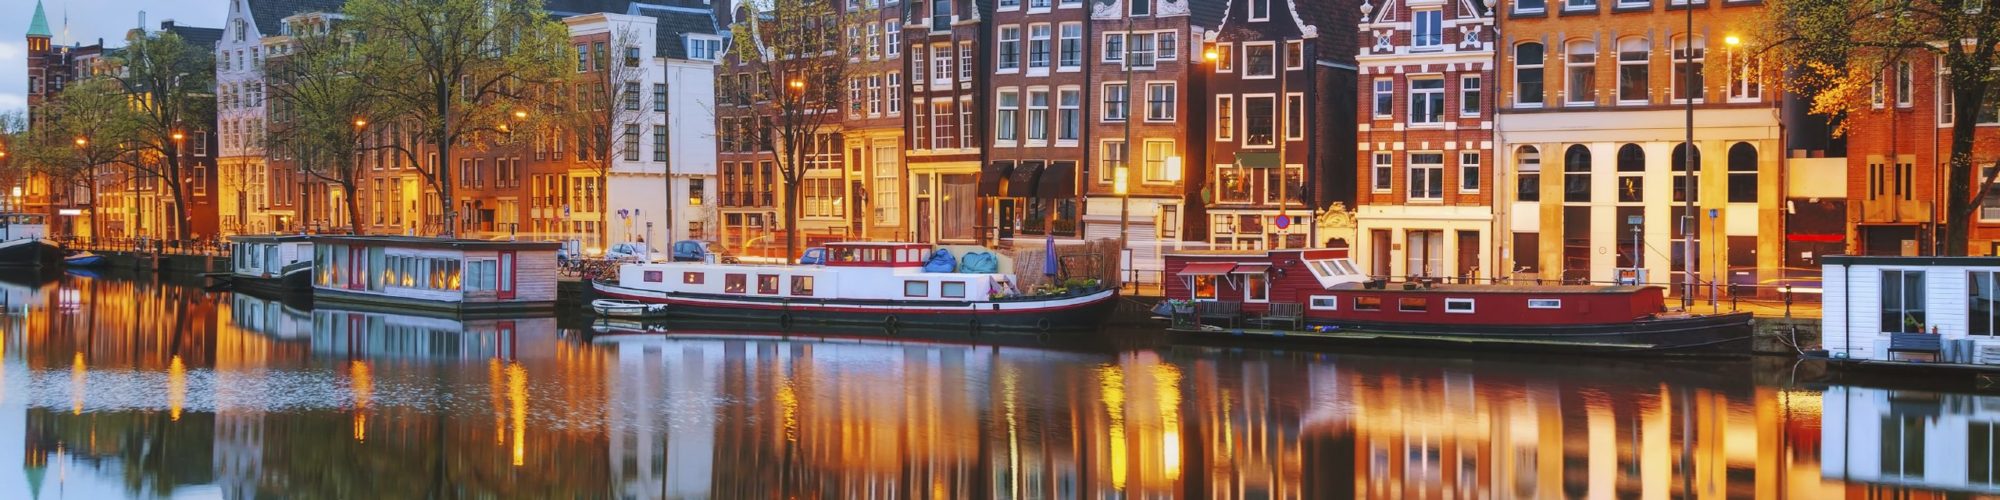 Netherlands travel agents packages deals